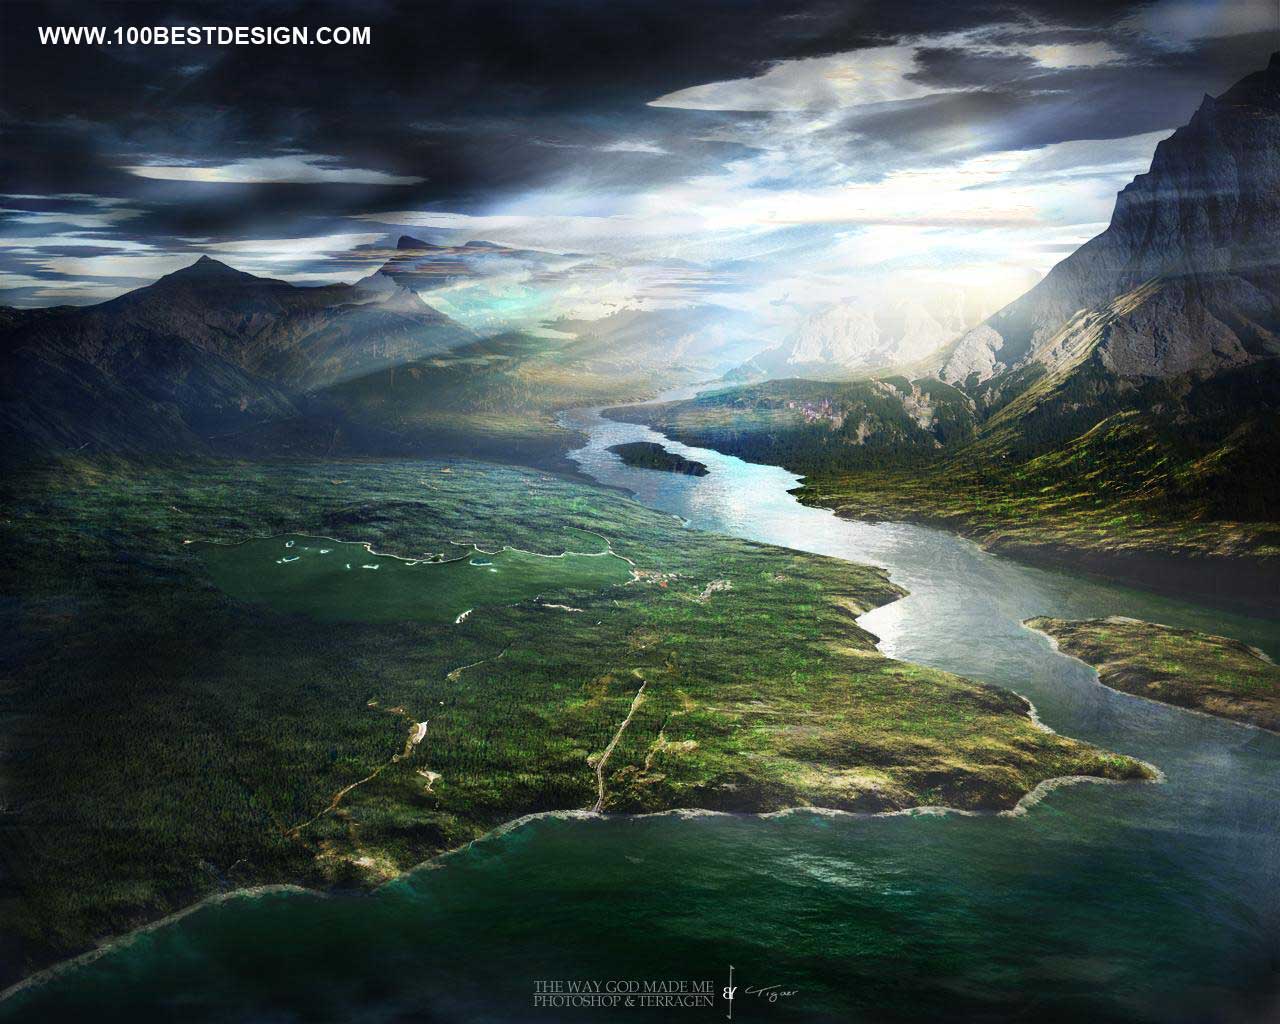   nature desktop wallpaper and background Terragen The Way God Made Me